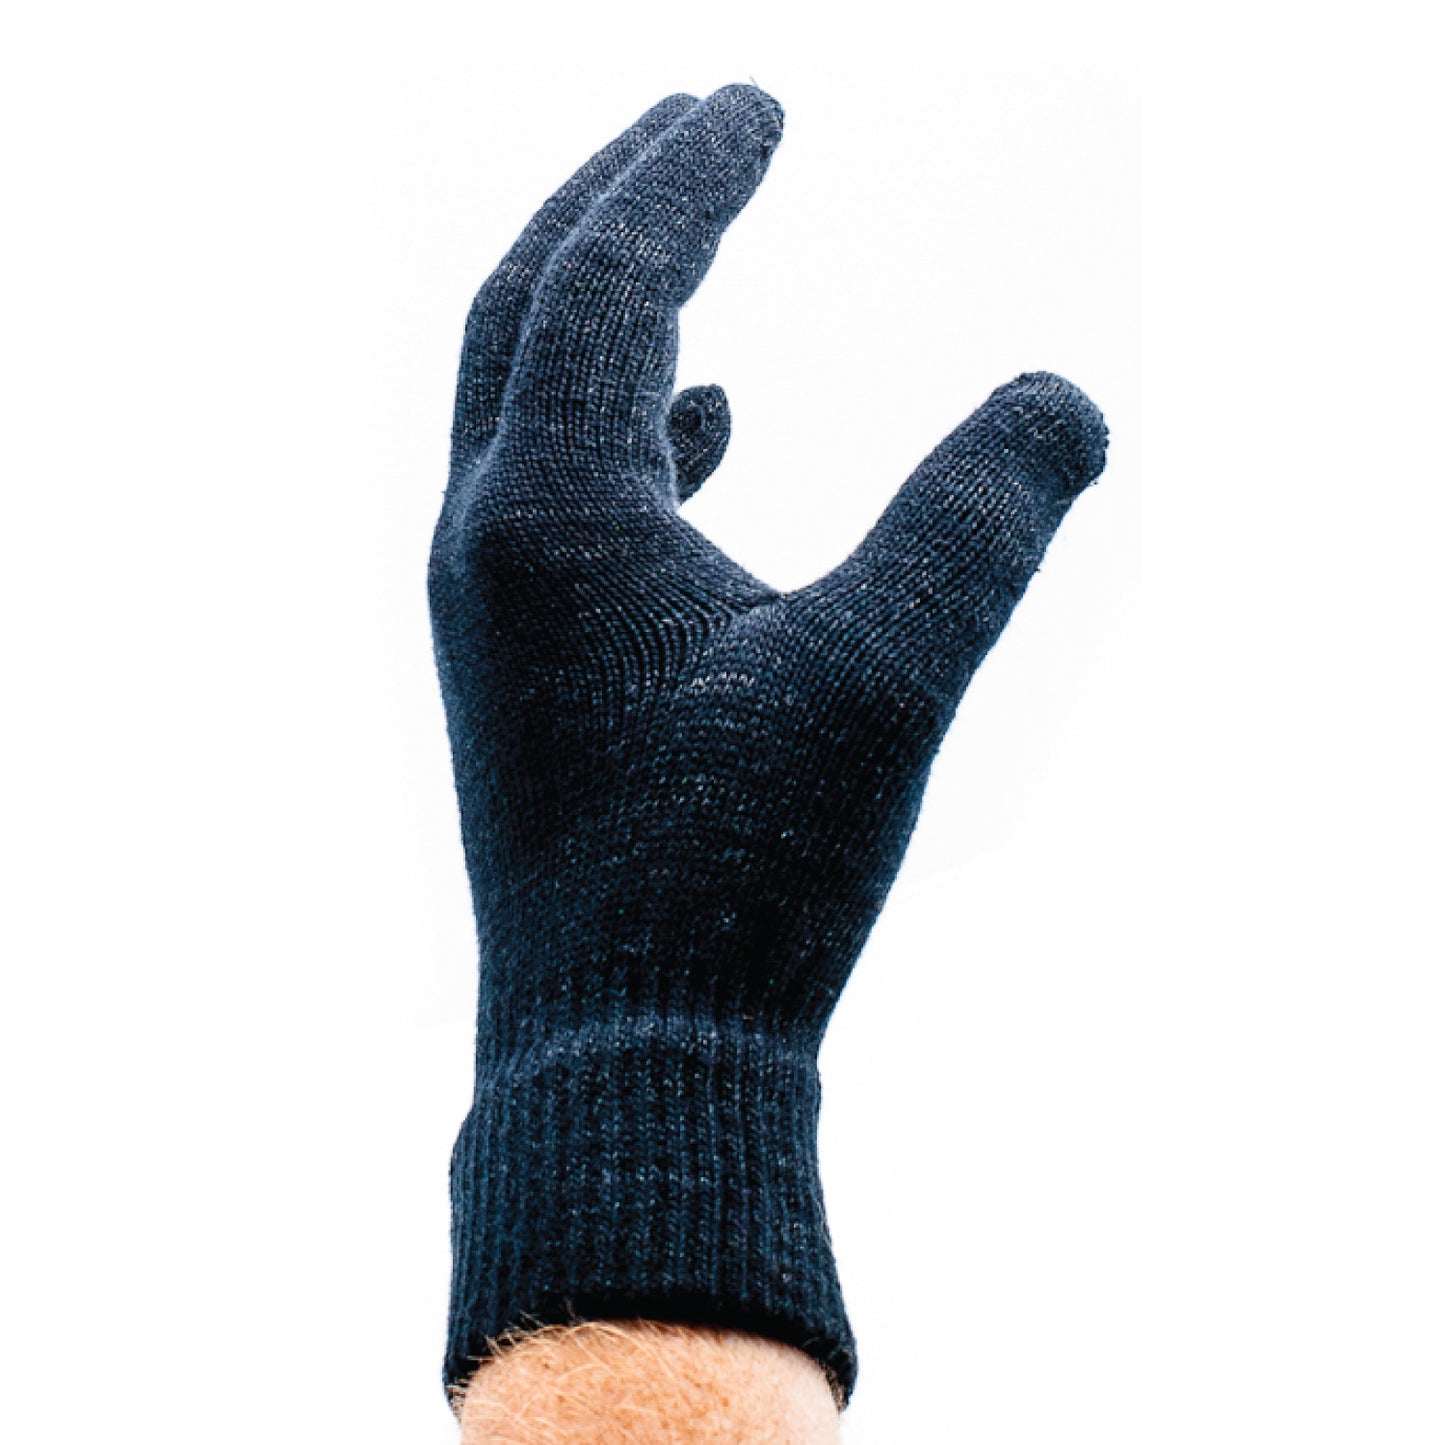 Winter Everyday Touchscreen Glove